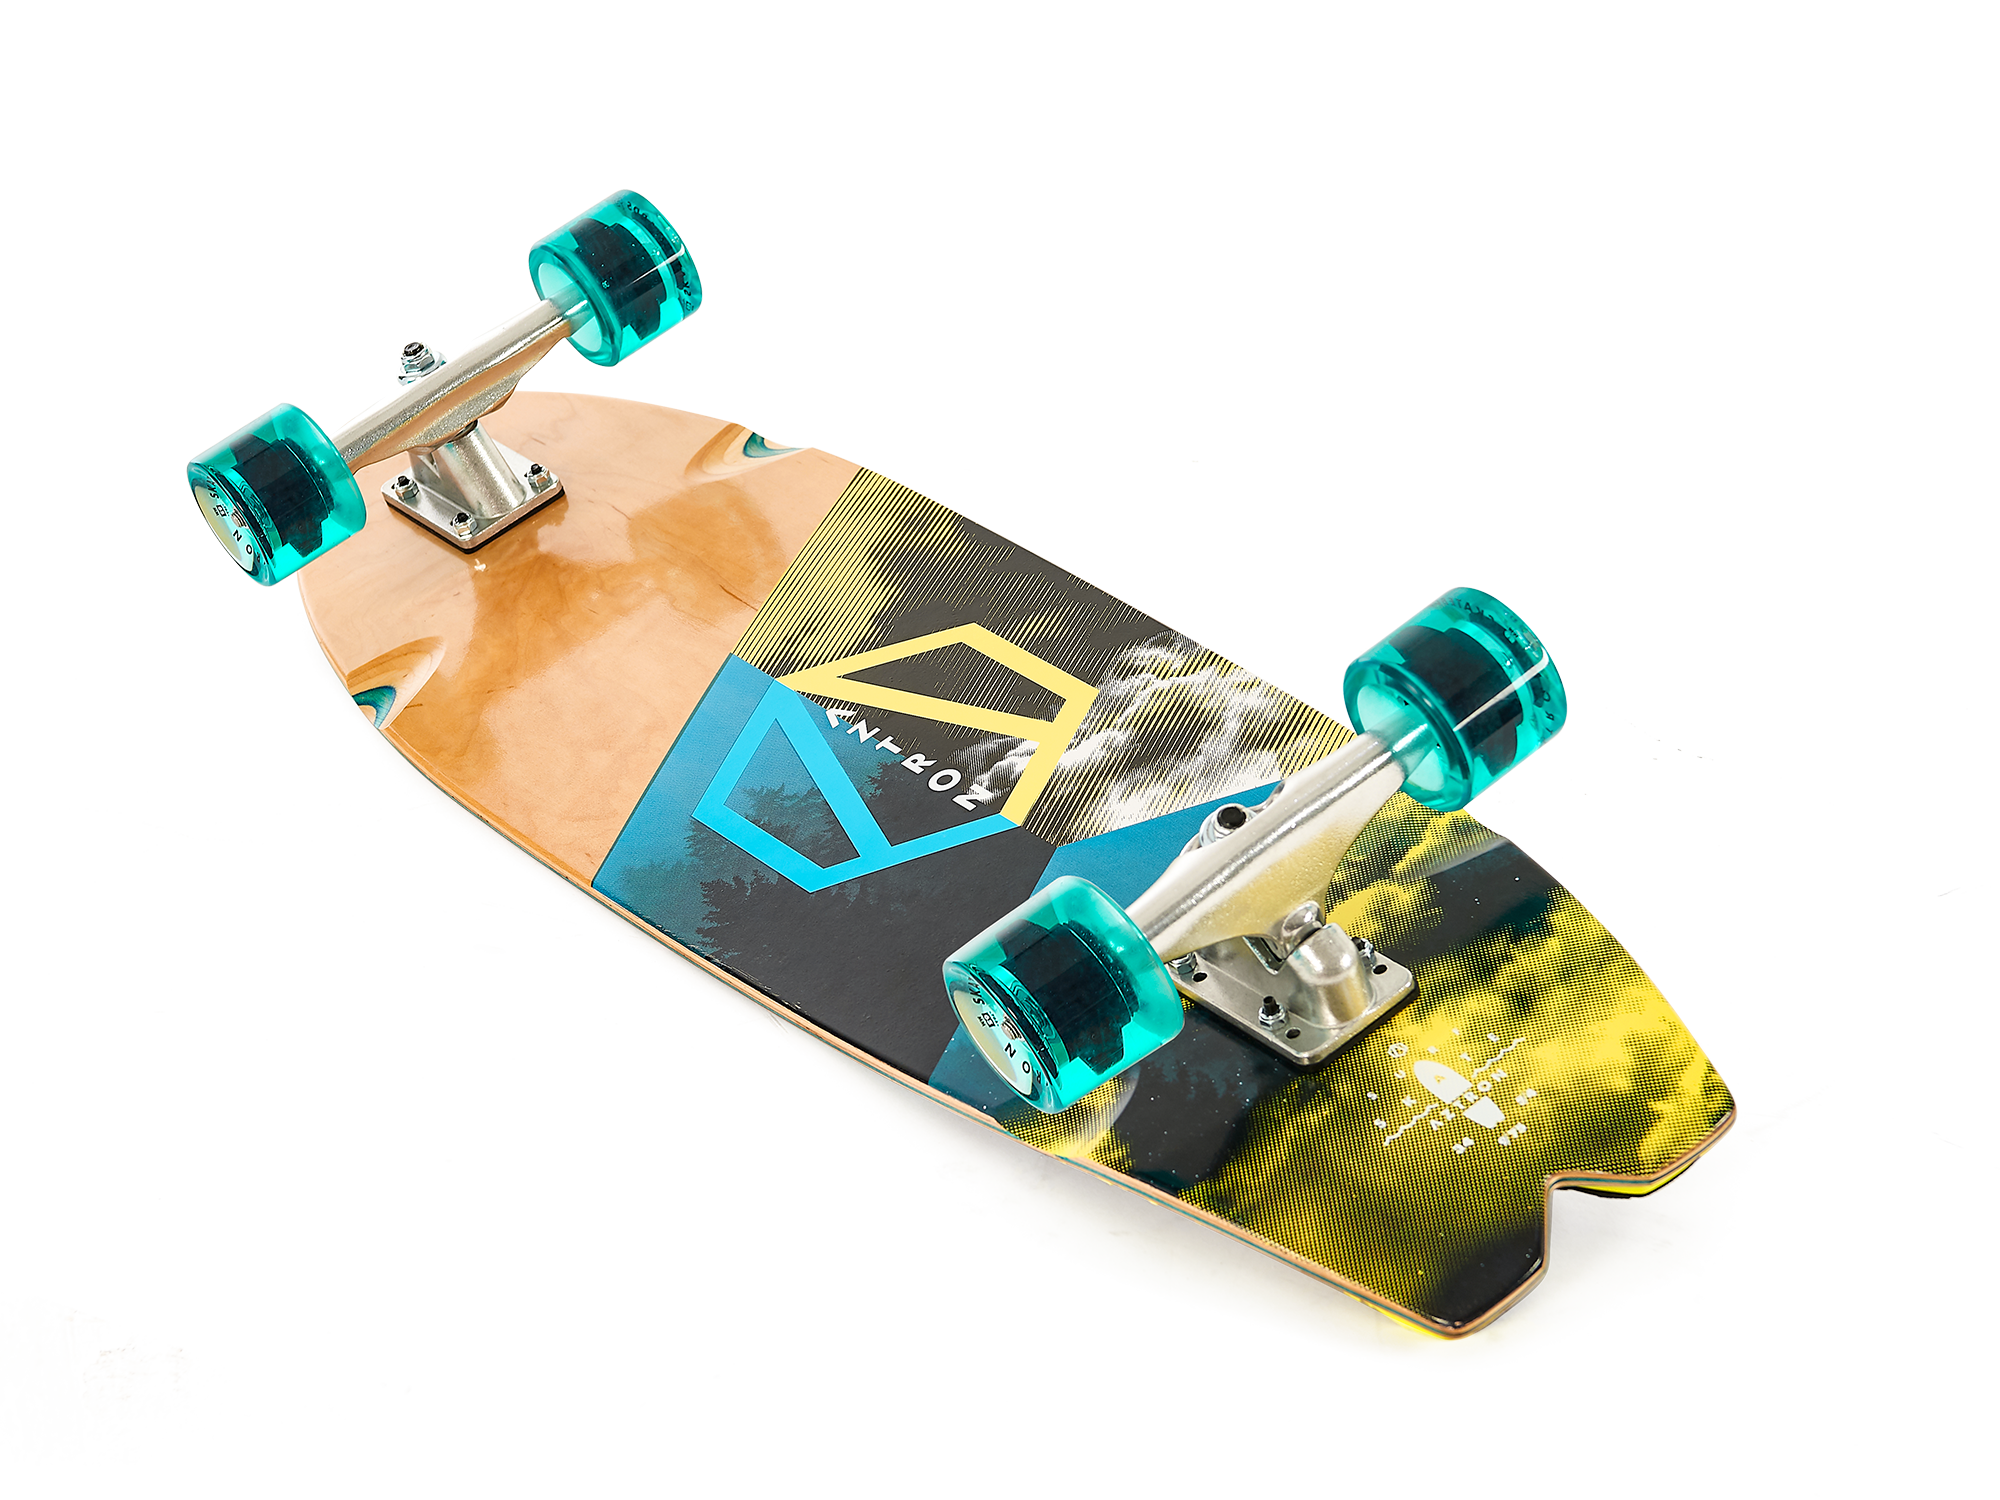 Aztron Surf Skateboard Space 40 "tabela